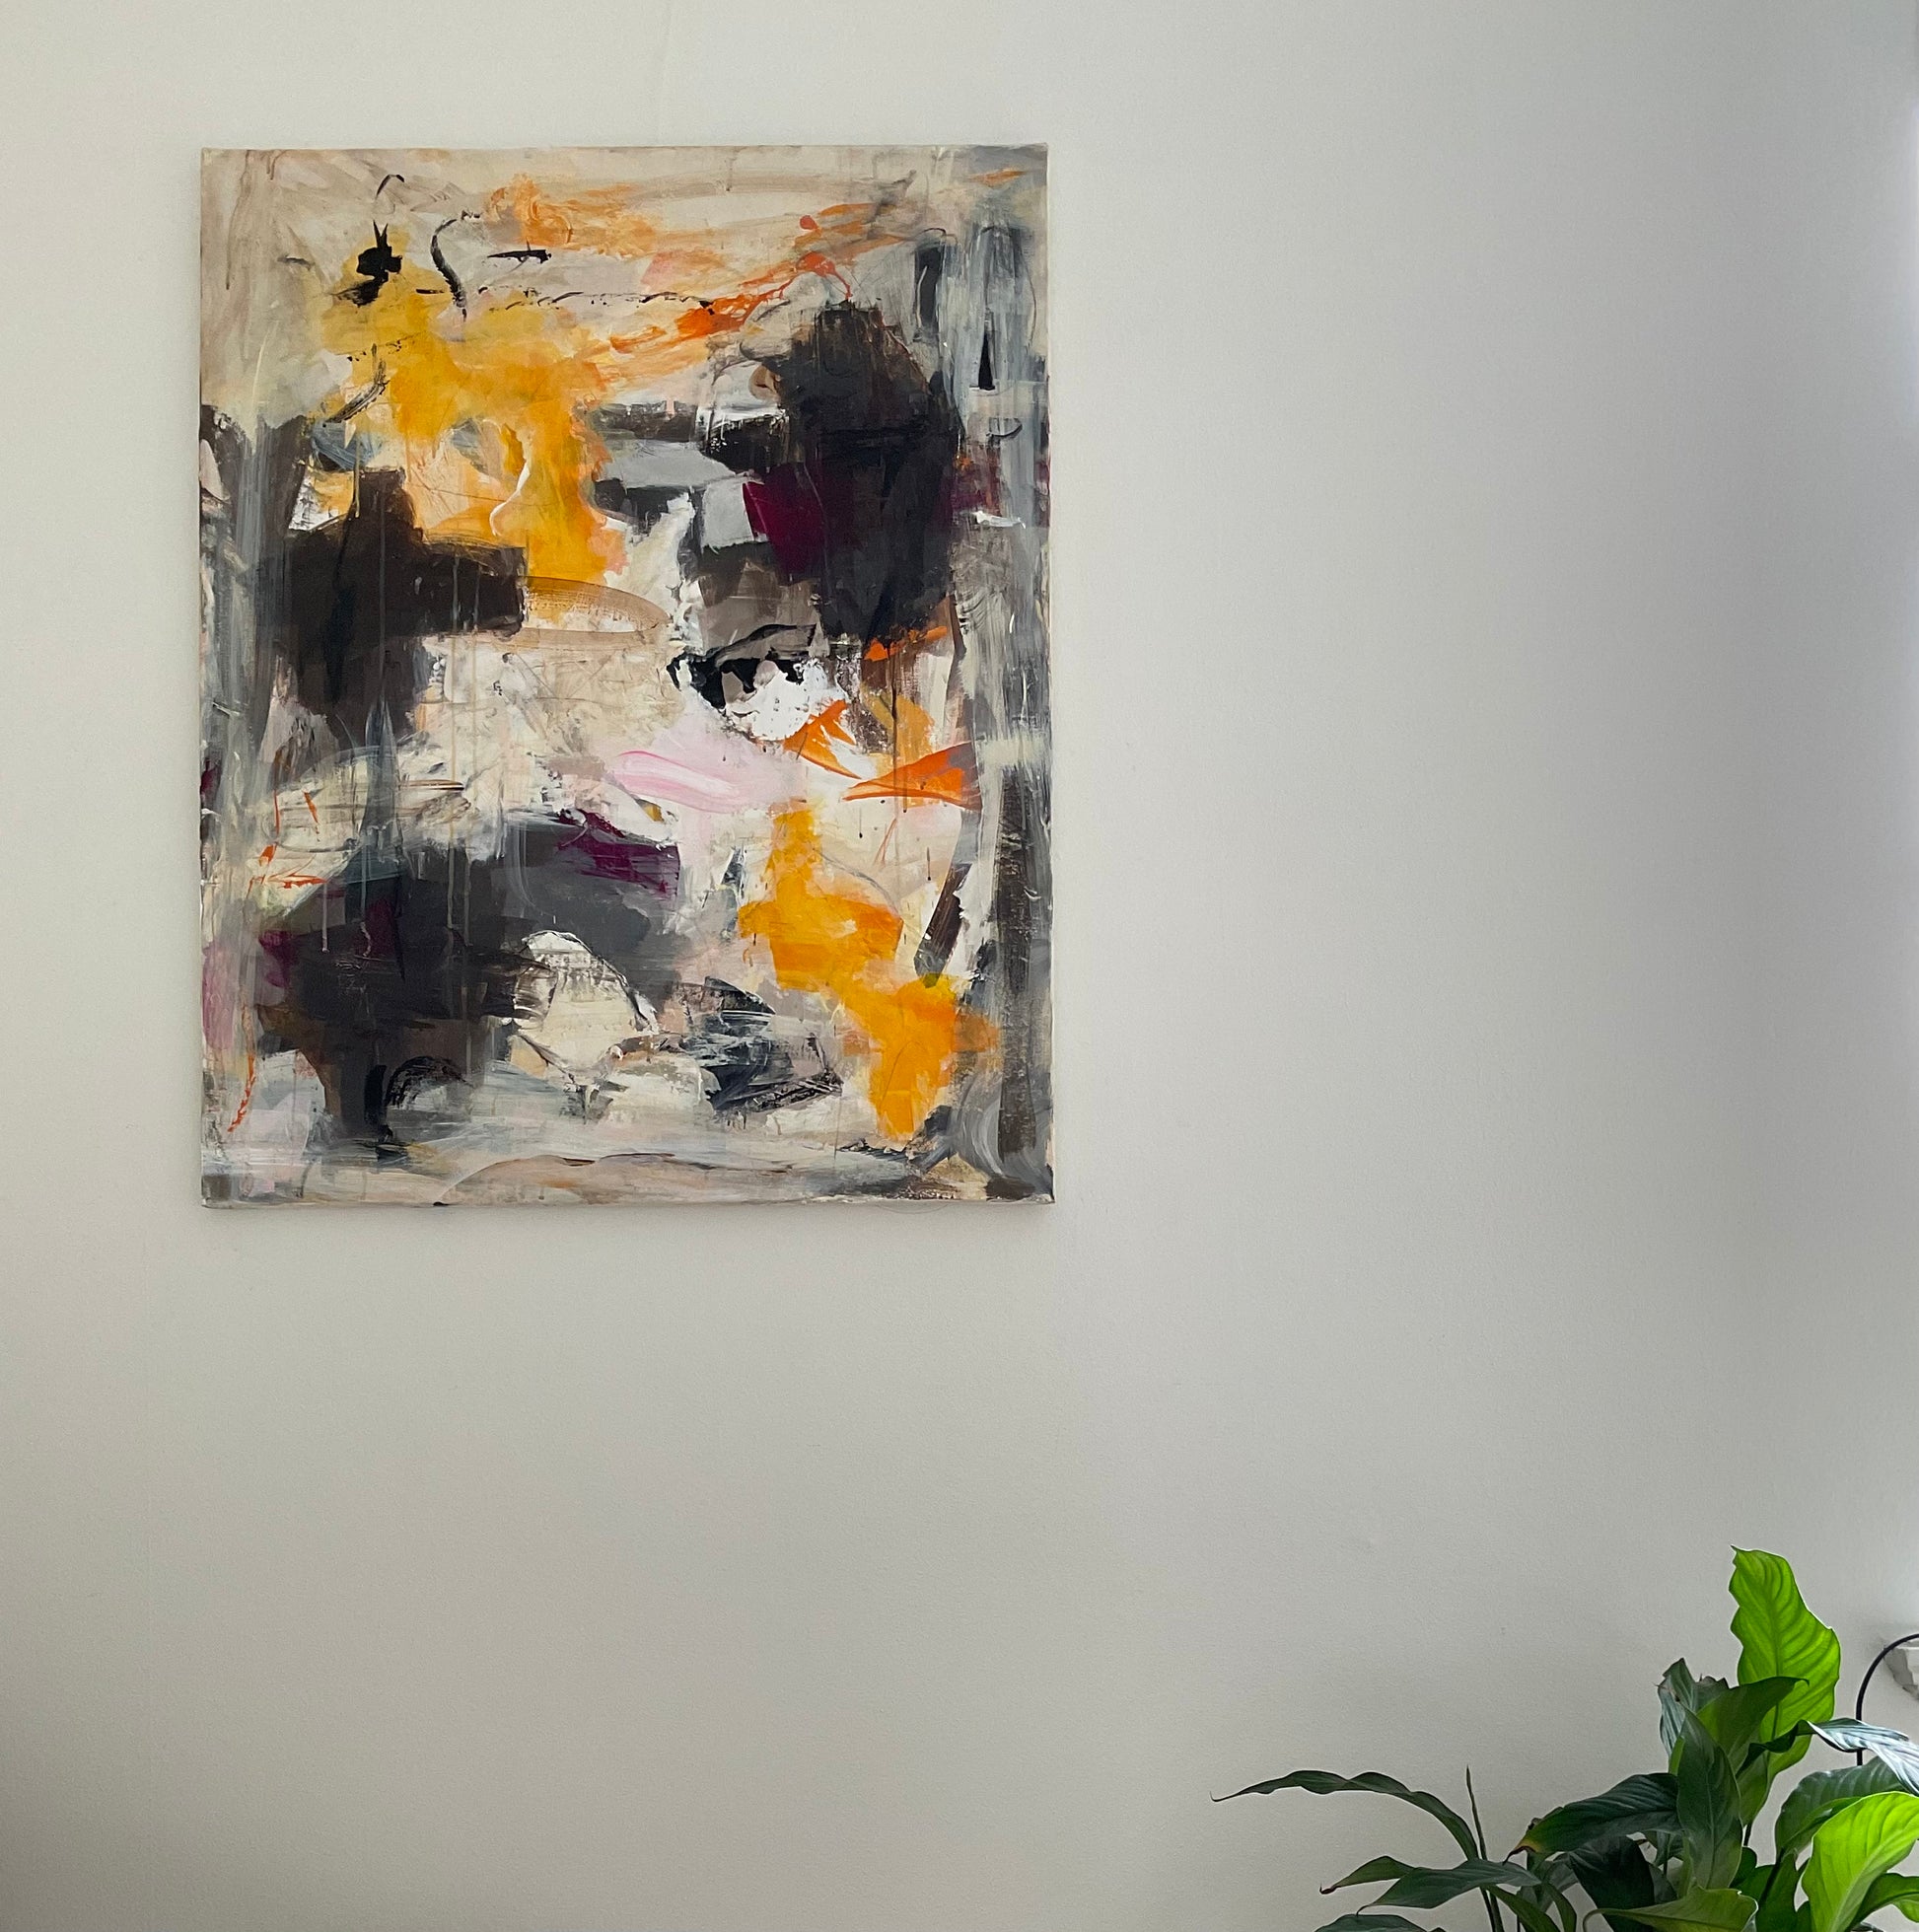 Abstrakt maleri, 80x100 cm, "Paradis" by Lone Reedtz , Abstrakt ekspressivt akrylmaleri på lærred